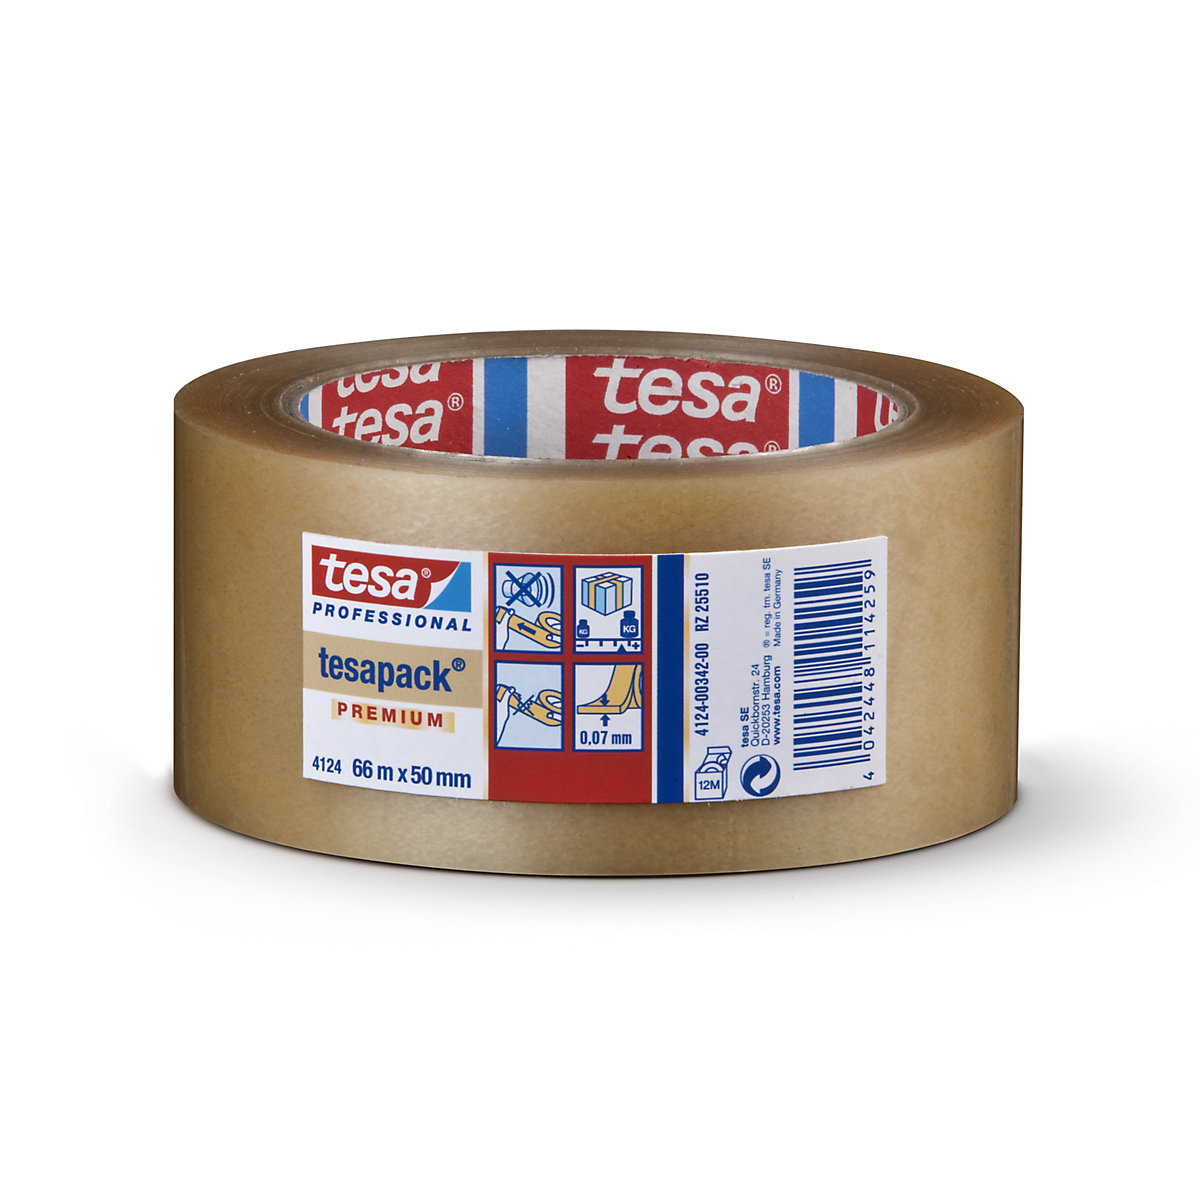 Cinta de embalaje de PVC – tesa, tesapack® 4124 Premium, UE 36 rollos, transparente, anchura de cinta 50 mm-1